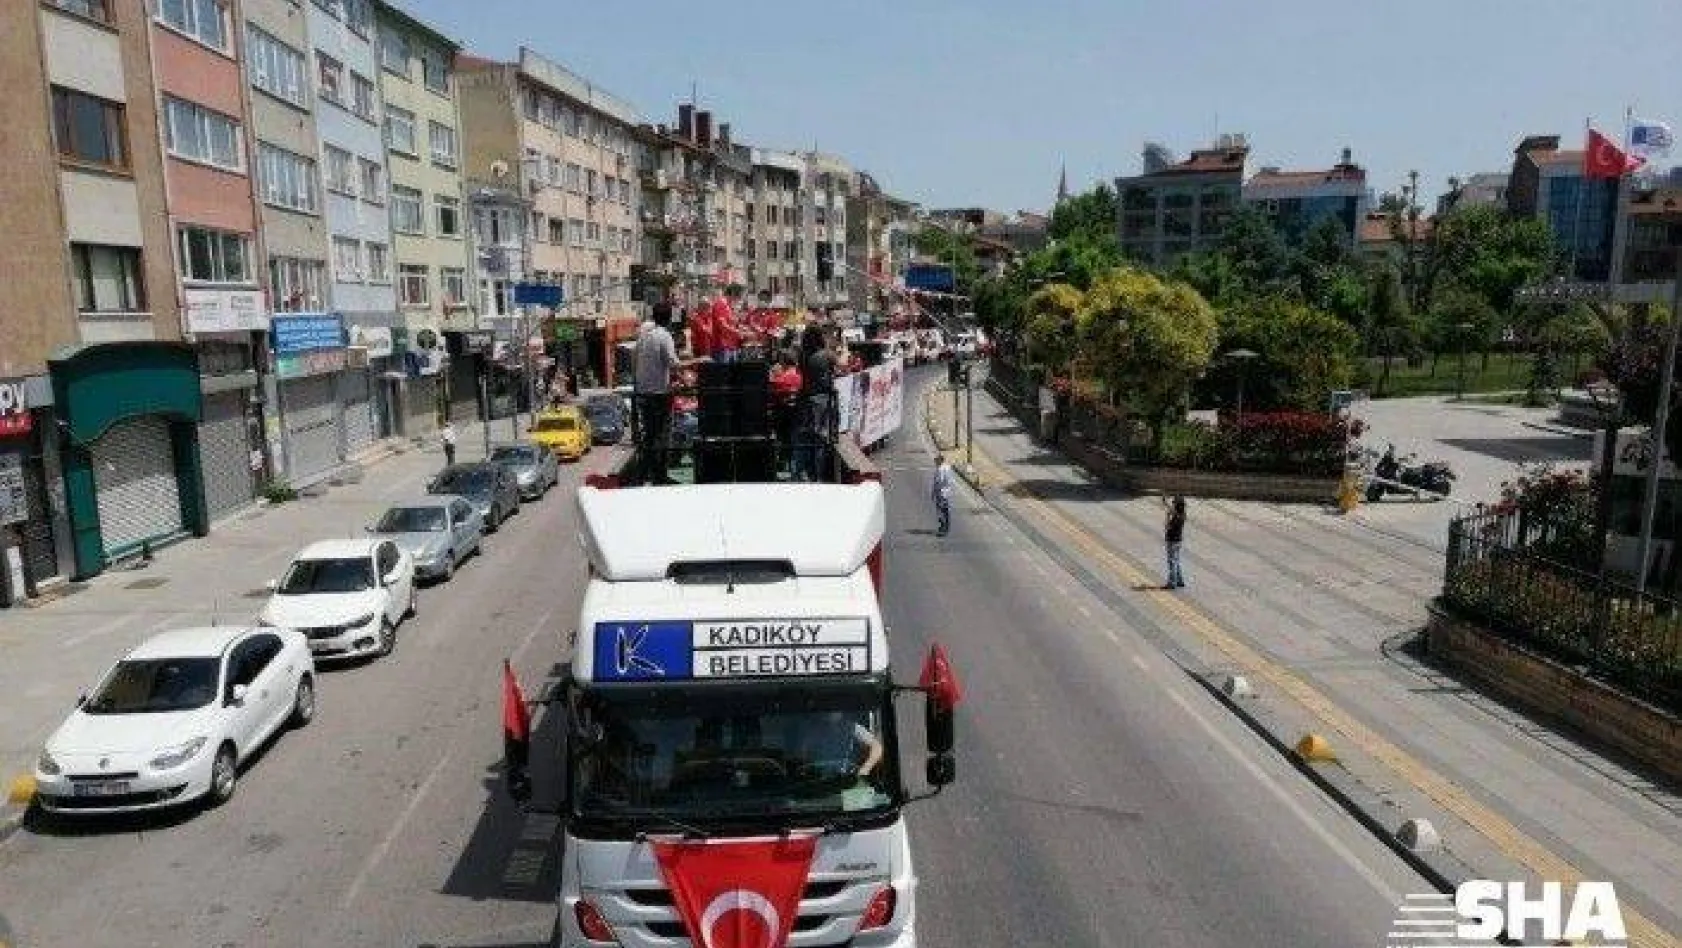 Kadıköy'de 19 Mayıs coşkusu sokaklara taşındı